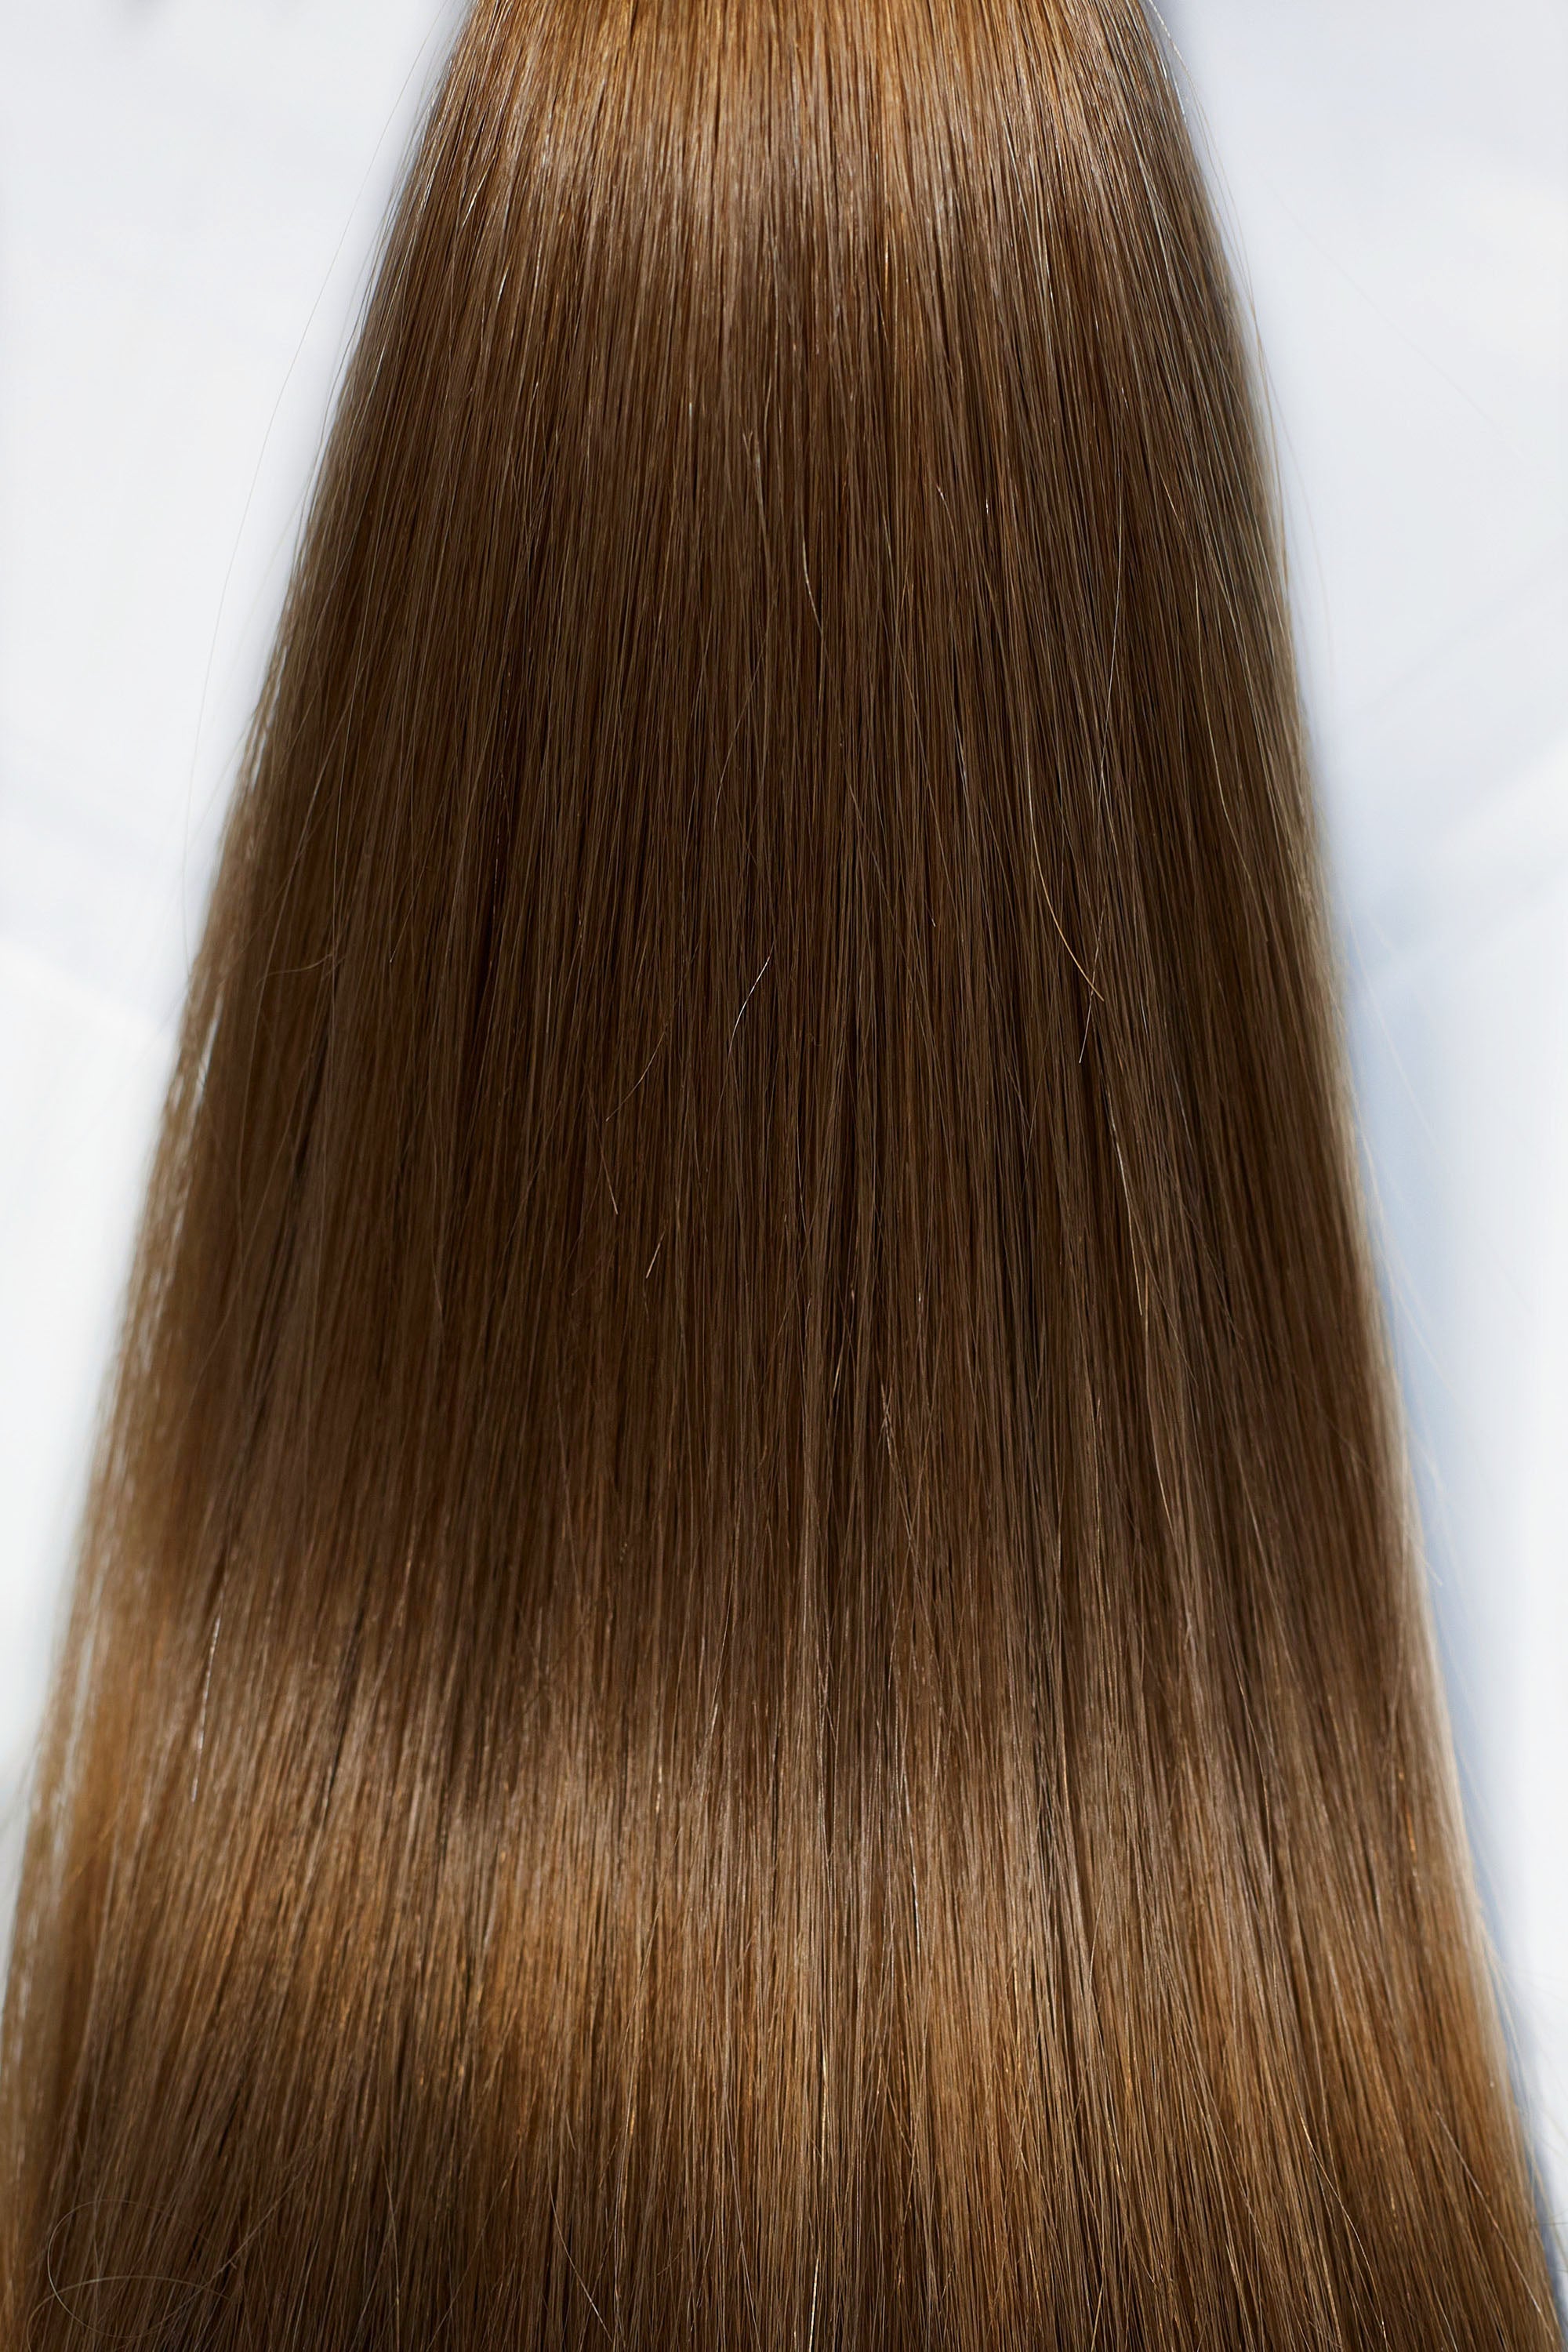 Behair professional Keratin Tip "Premium" 16" (40cm) Natural Straight Chestnut #6 - 25g (1g each pcs) hair extensions